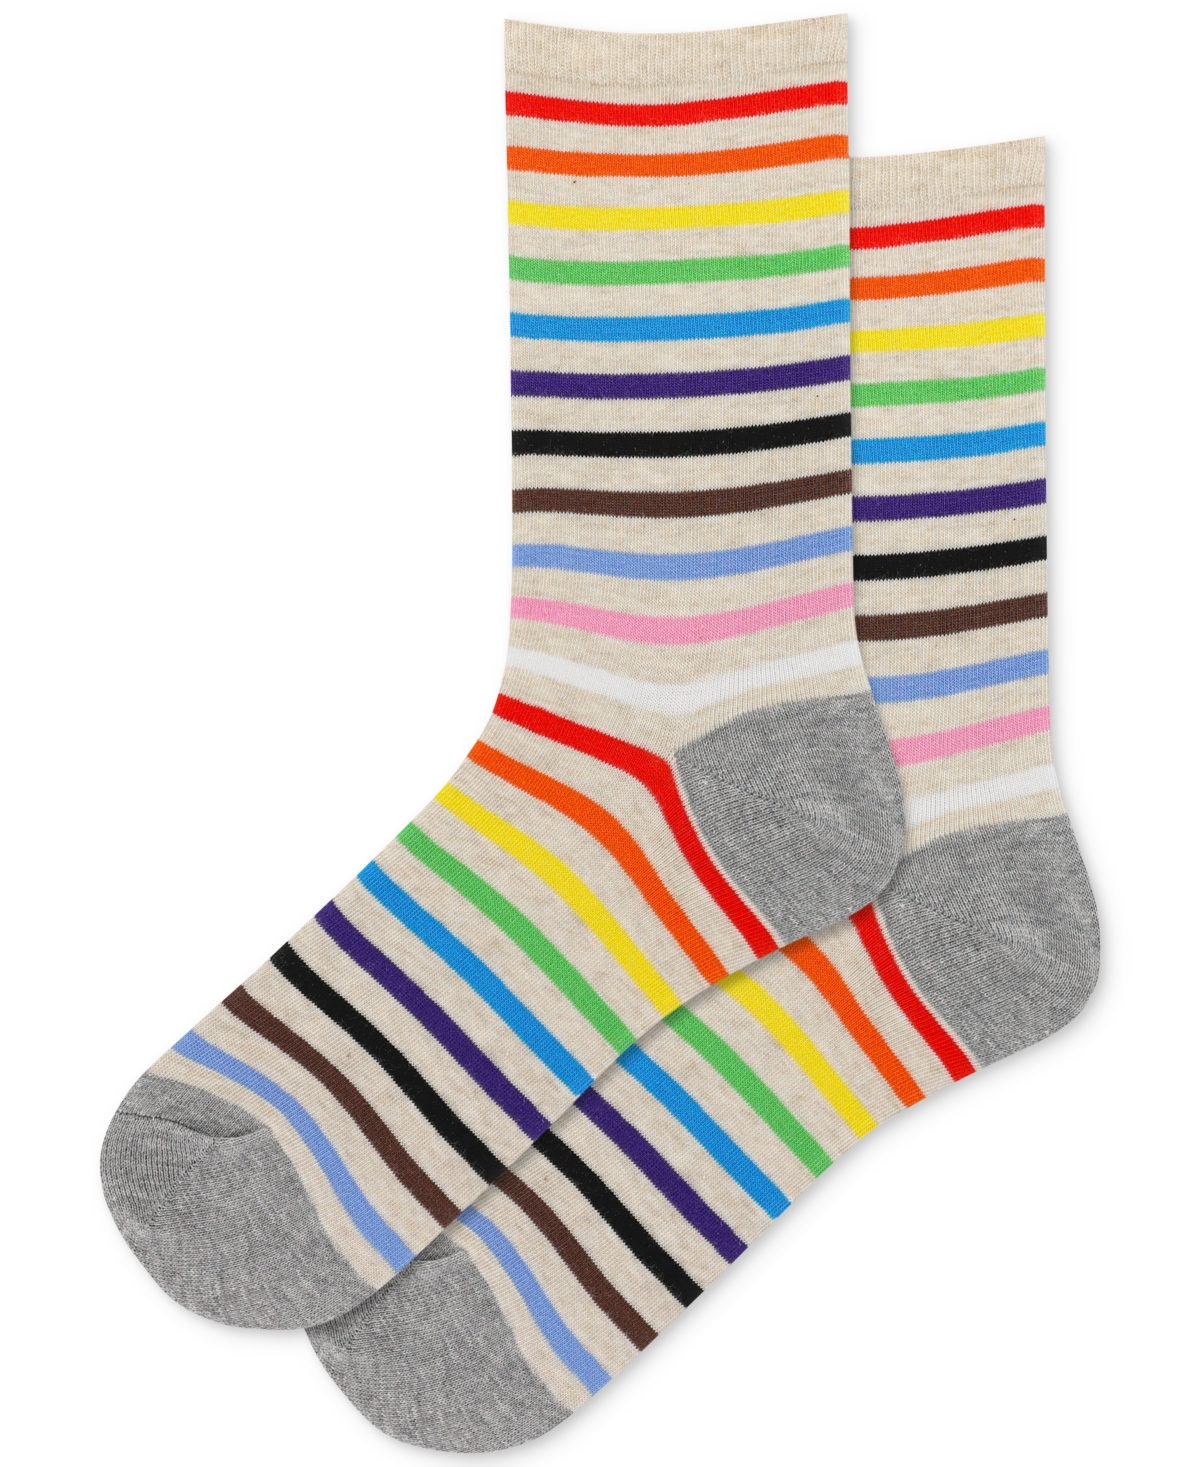 Women's Rainbow Striped Crew Socks - Multi Stripe